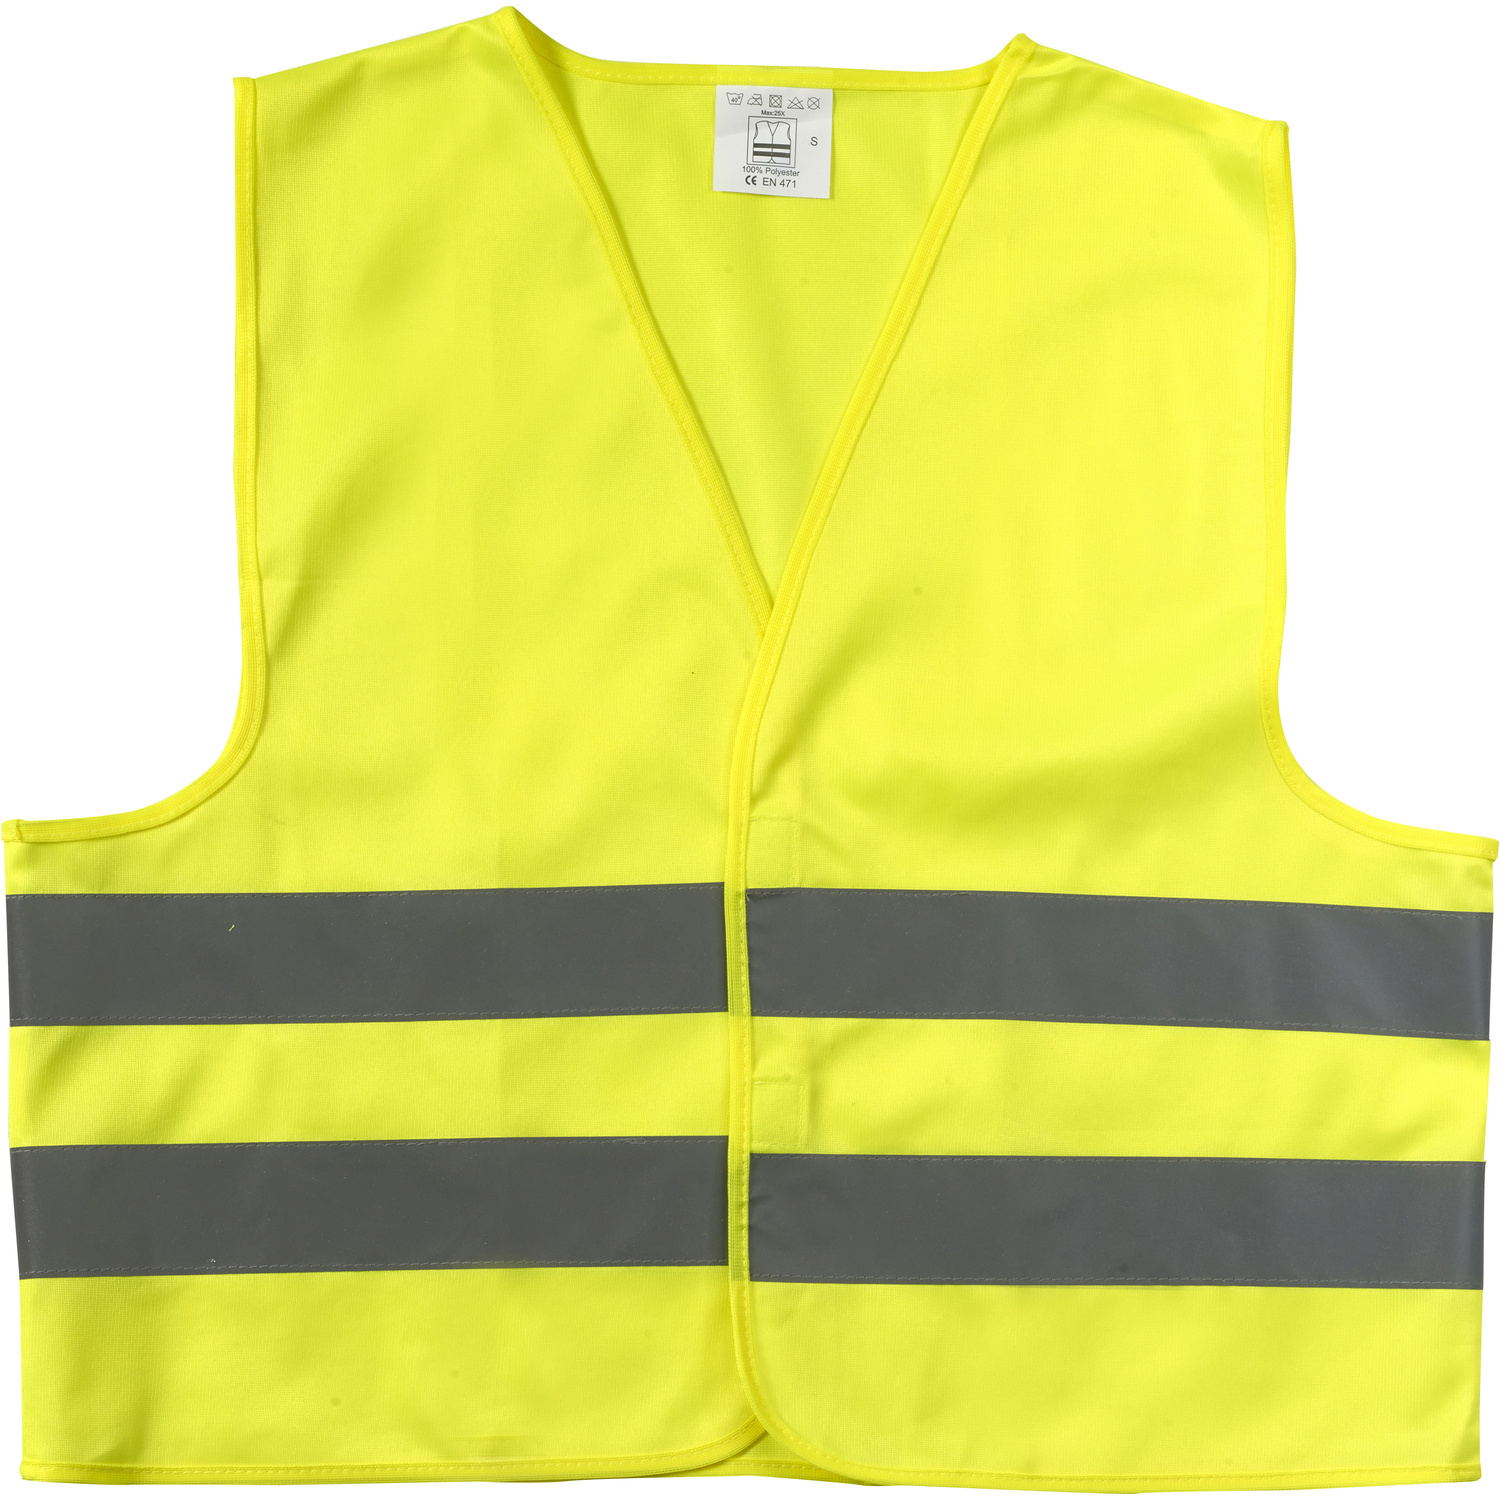 006542 006999999 2d090 frt pro01 fal - High visibility safety jacket polyester (75D)